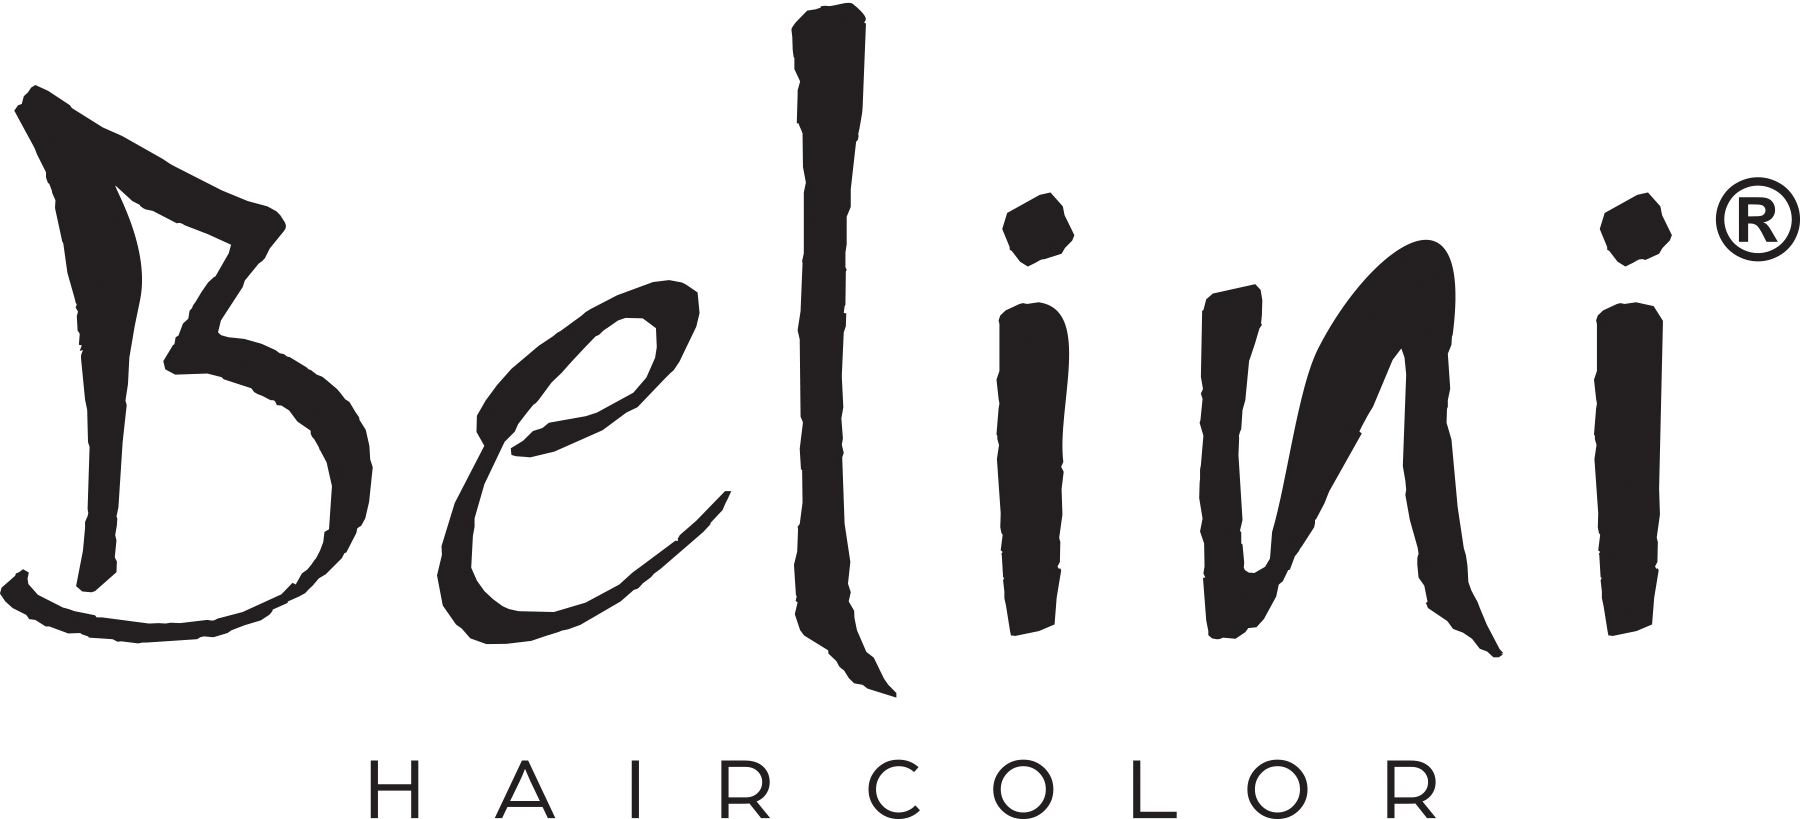 Belini Logo